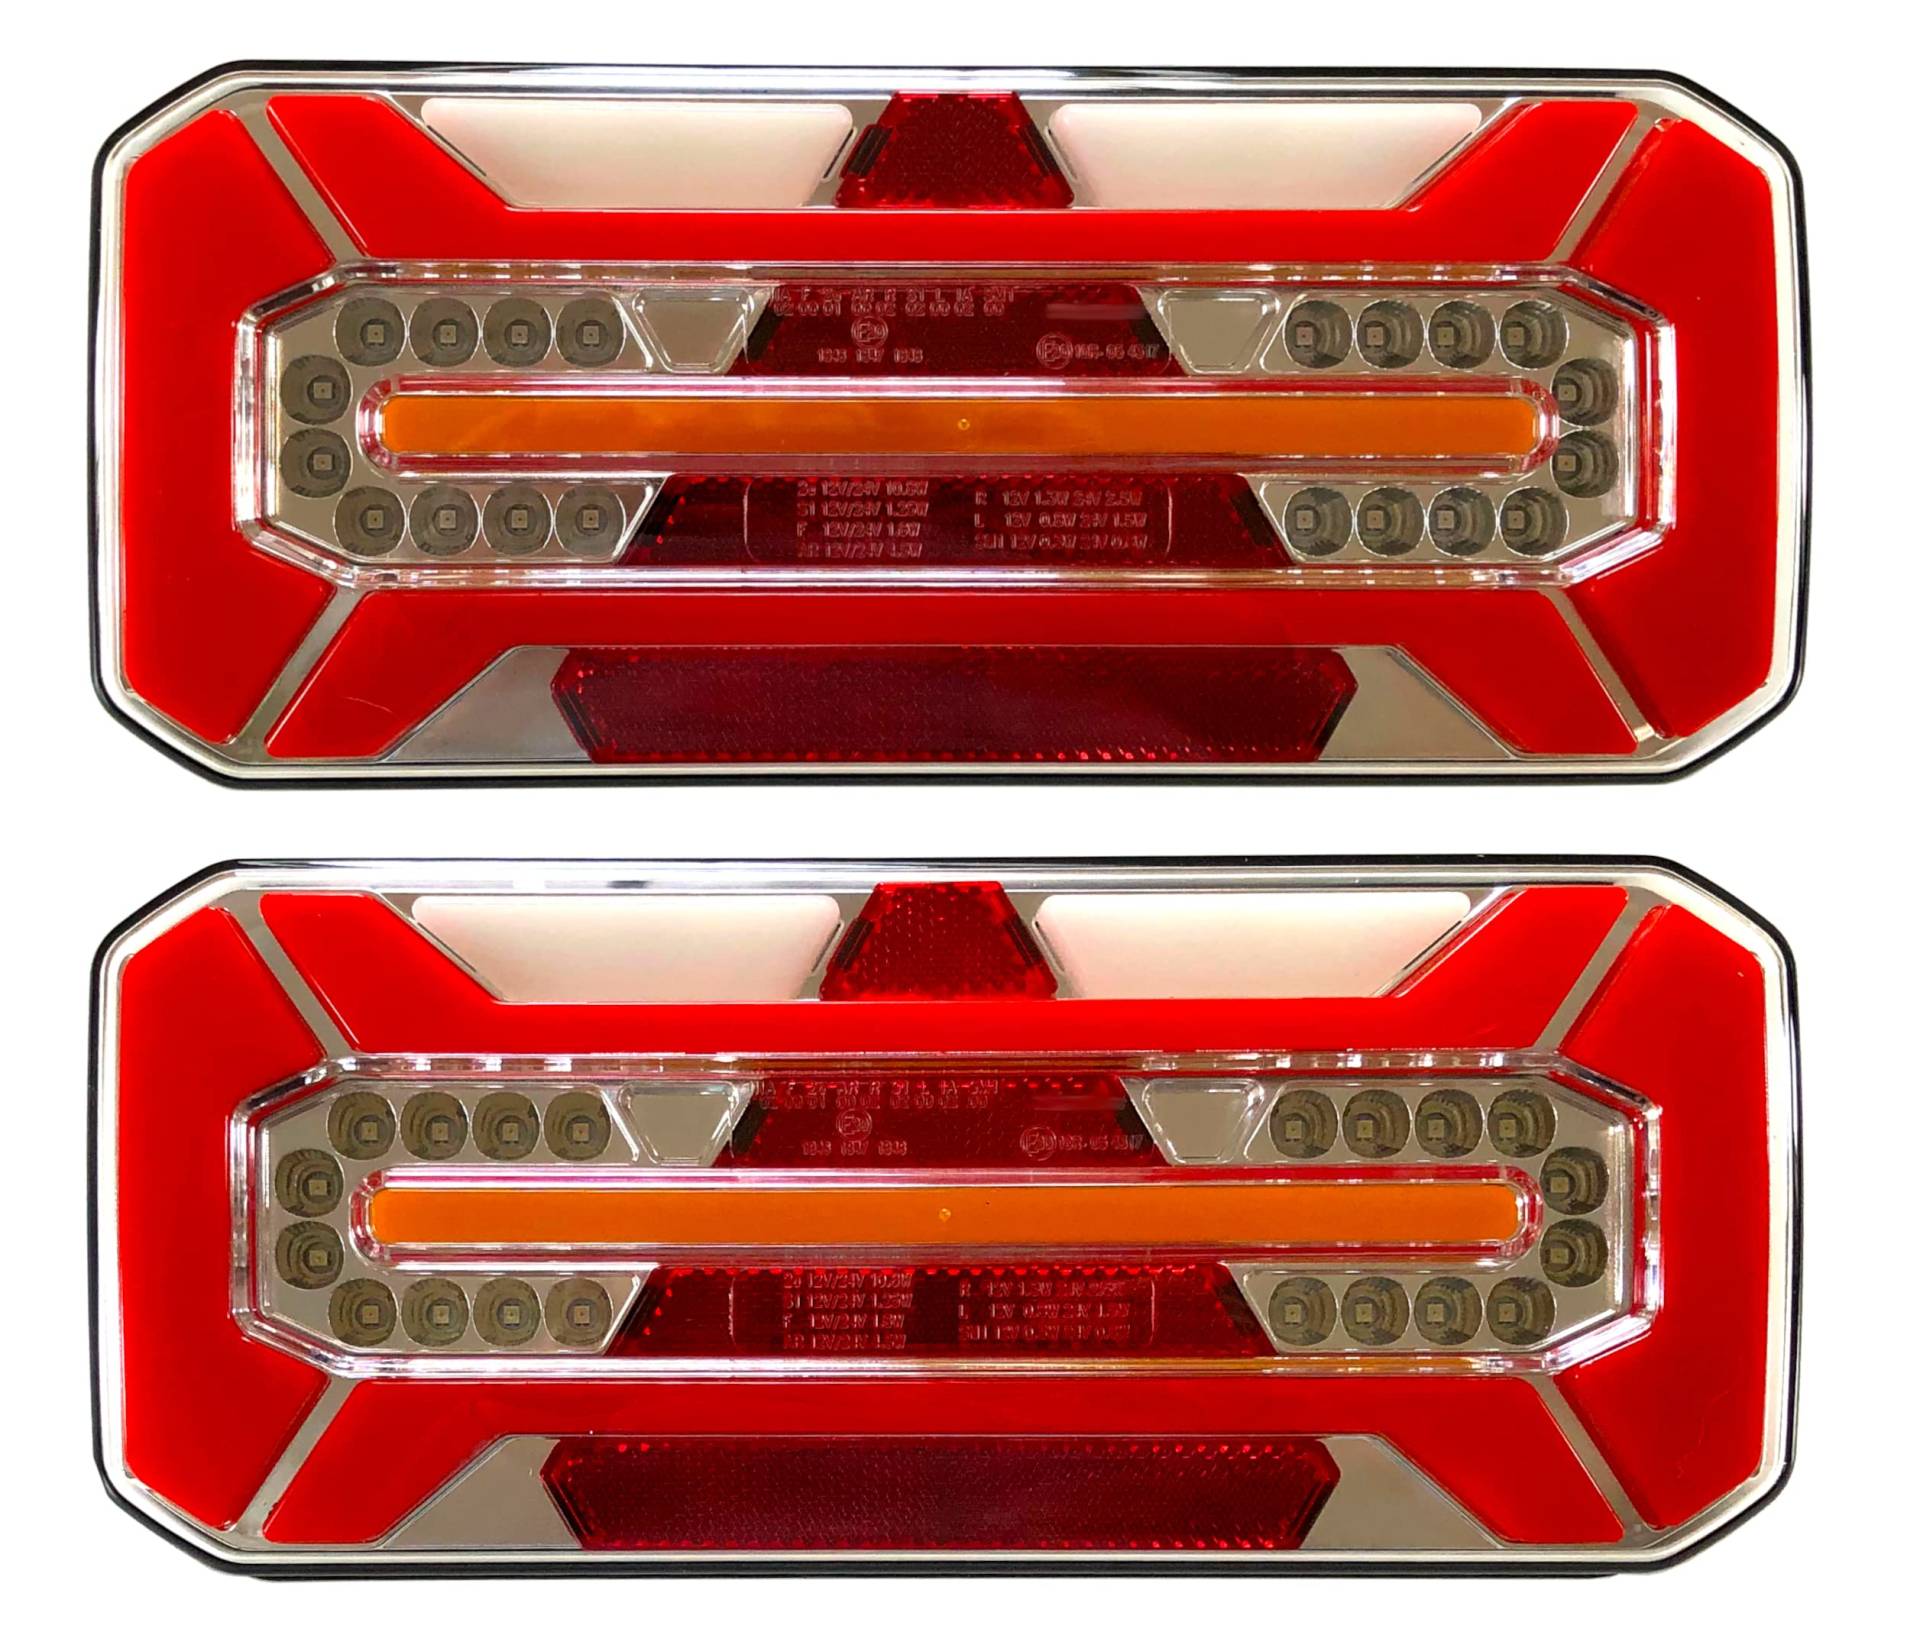 MelTruck® 2x LED Rückleuchten LKW Anhänger Rücklicht dynamische Blinker E20 7 Funktionen 12V/24V SET von MelTruck